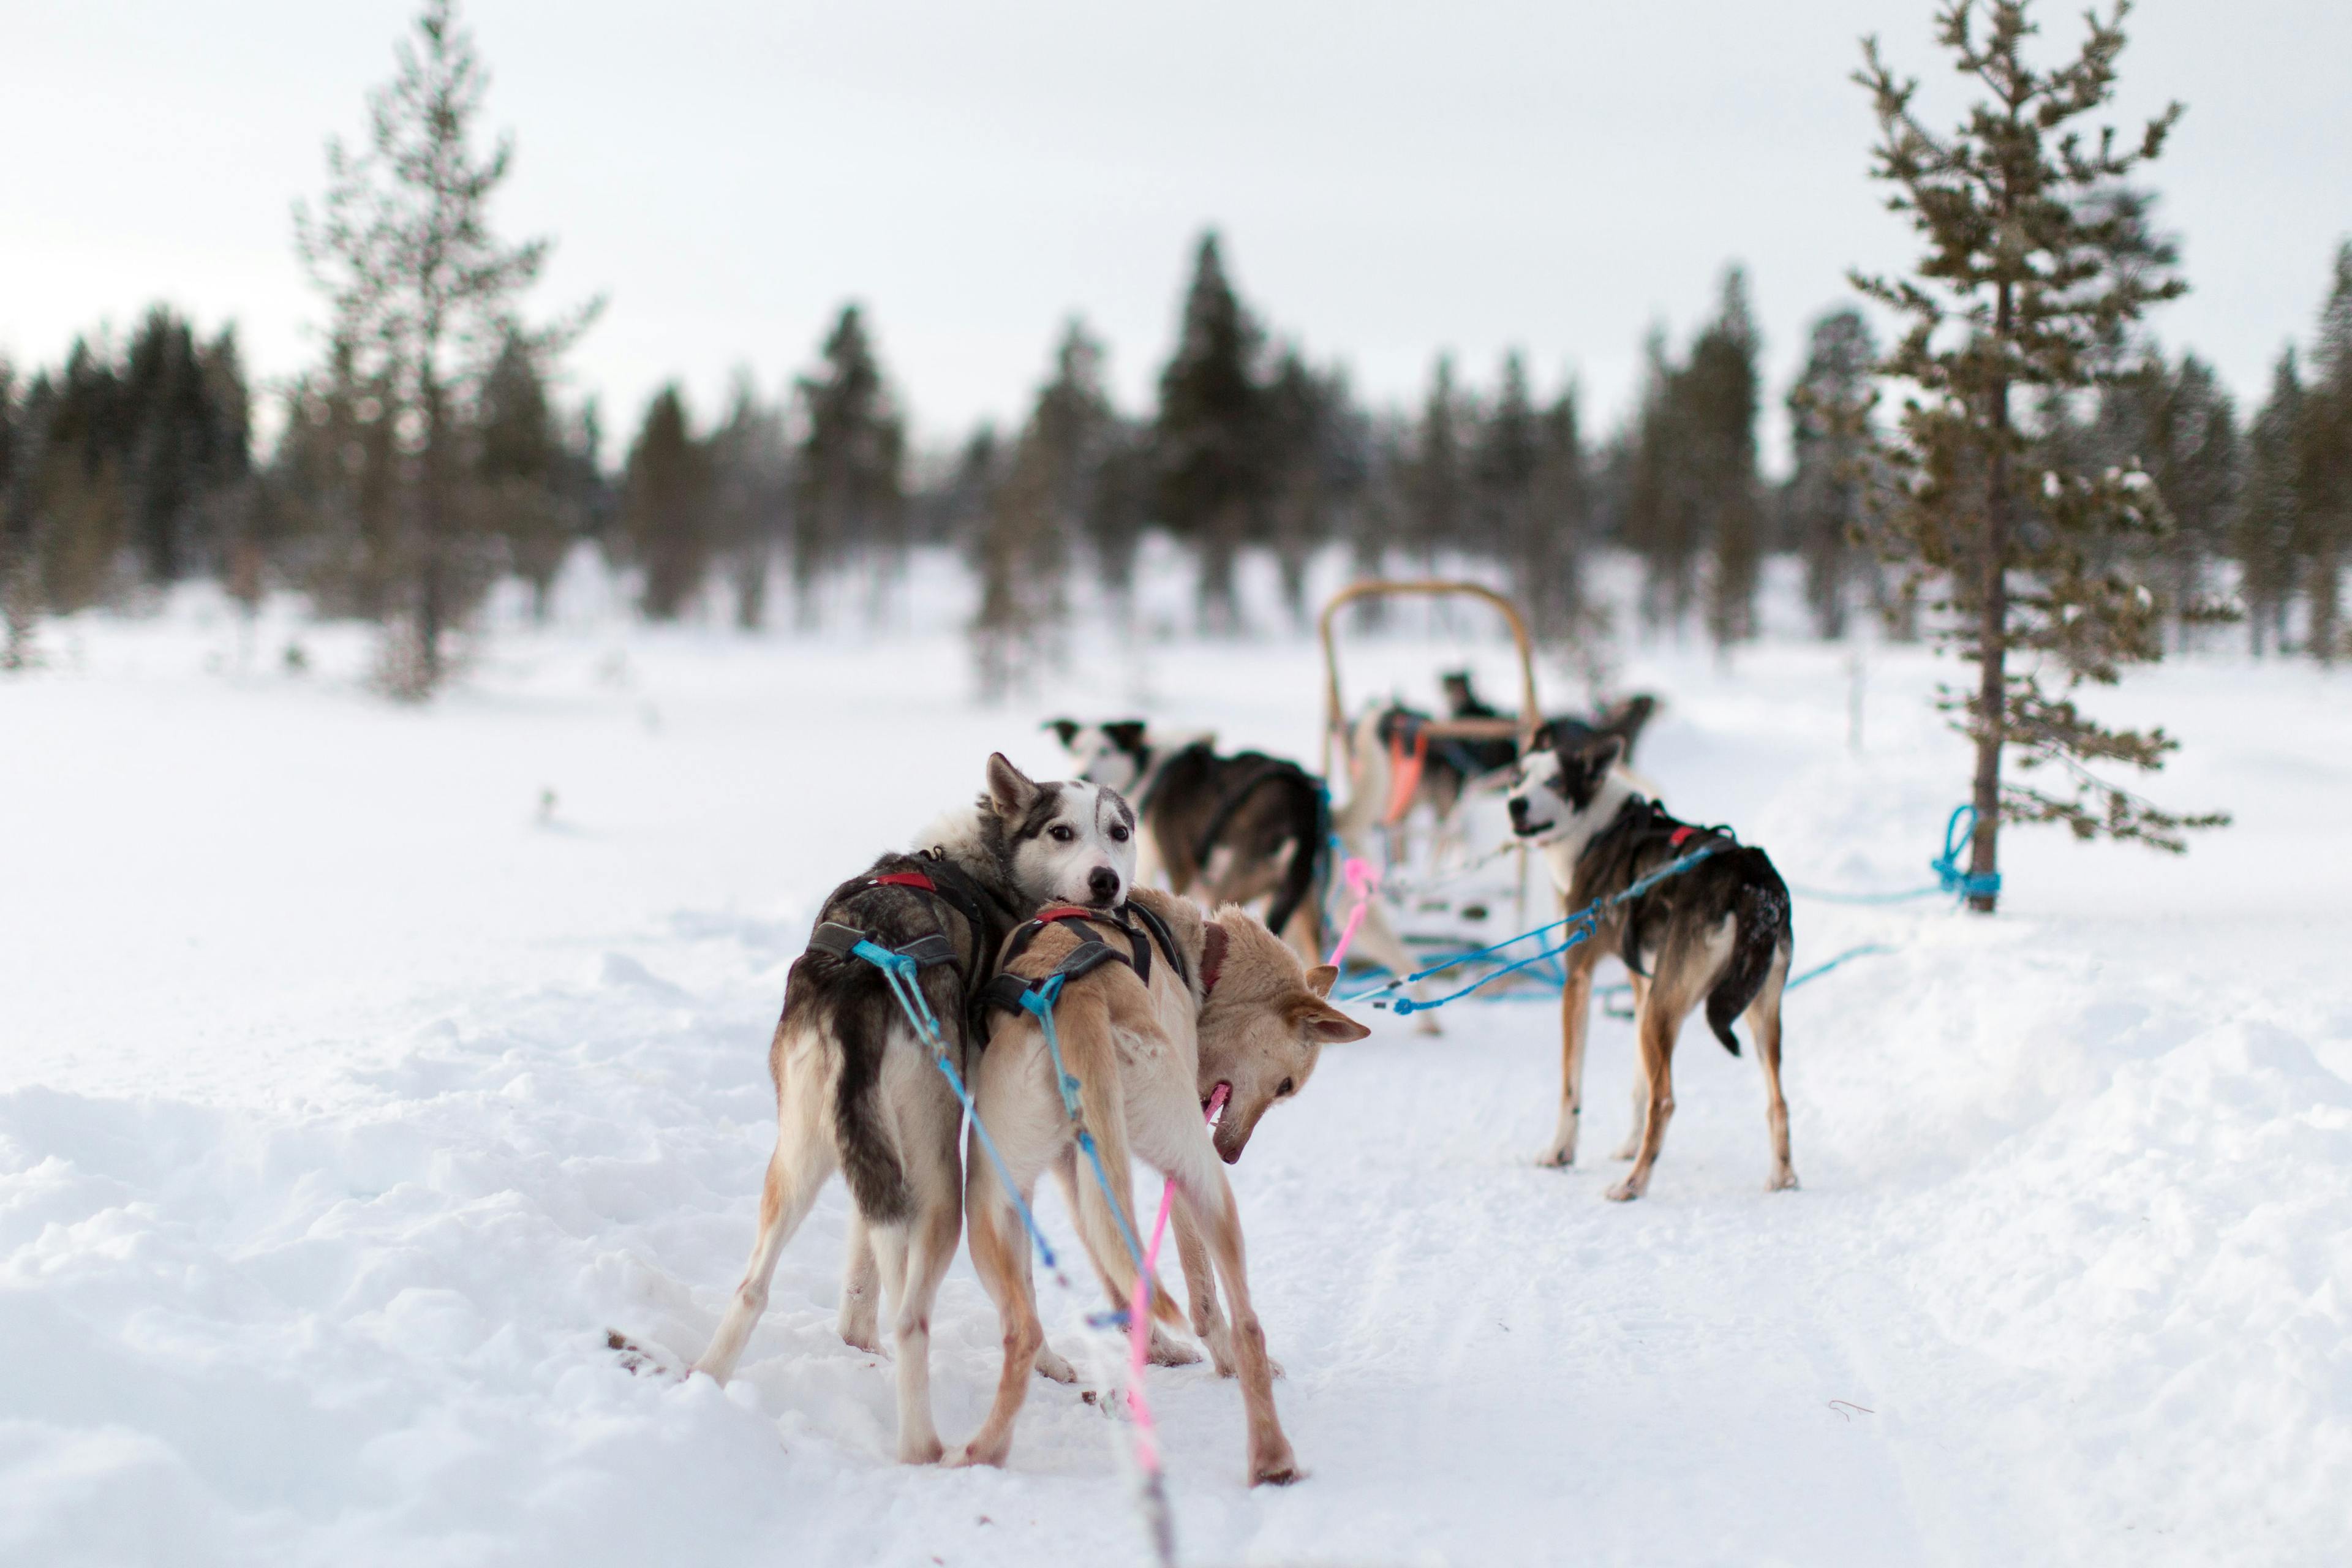 Husky dogs pulling sledges on snow